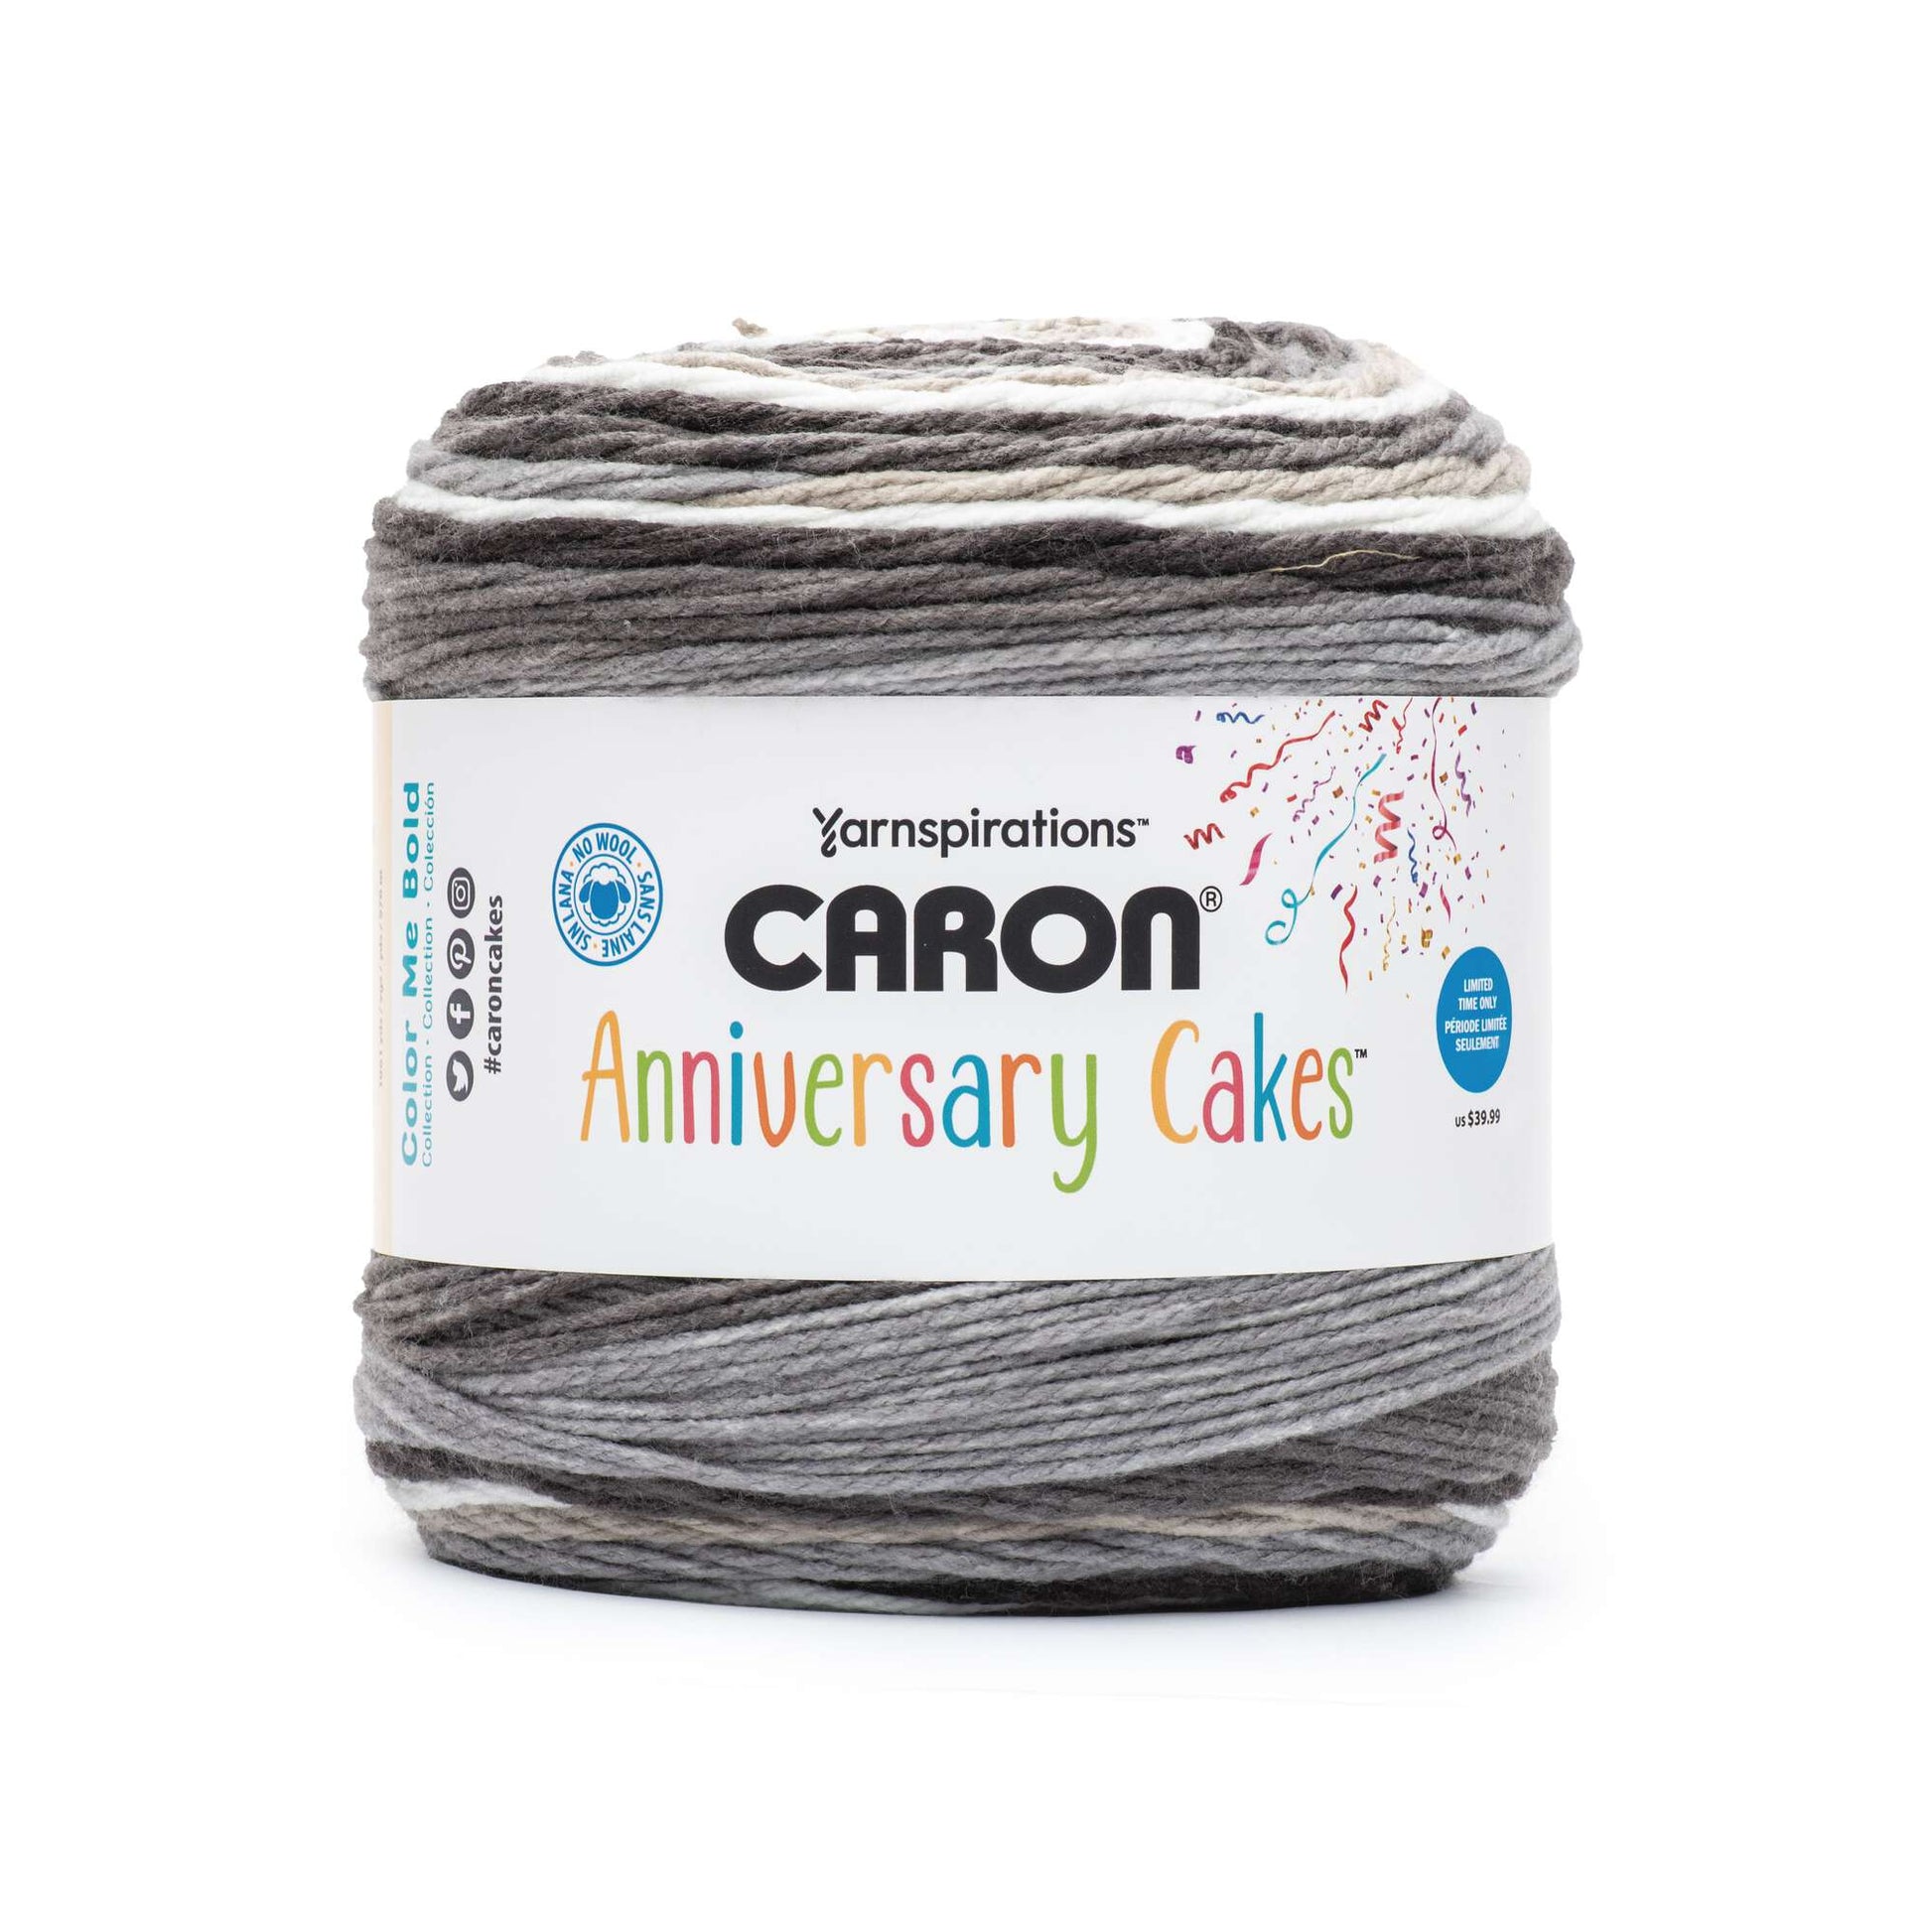 Caron Anniversary Cakes Yarn (1000g/35.3oz) - Discontinued Shades